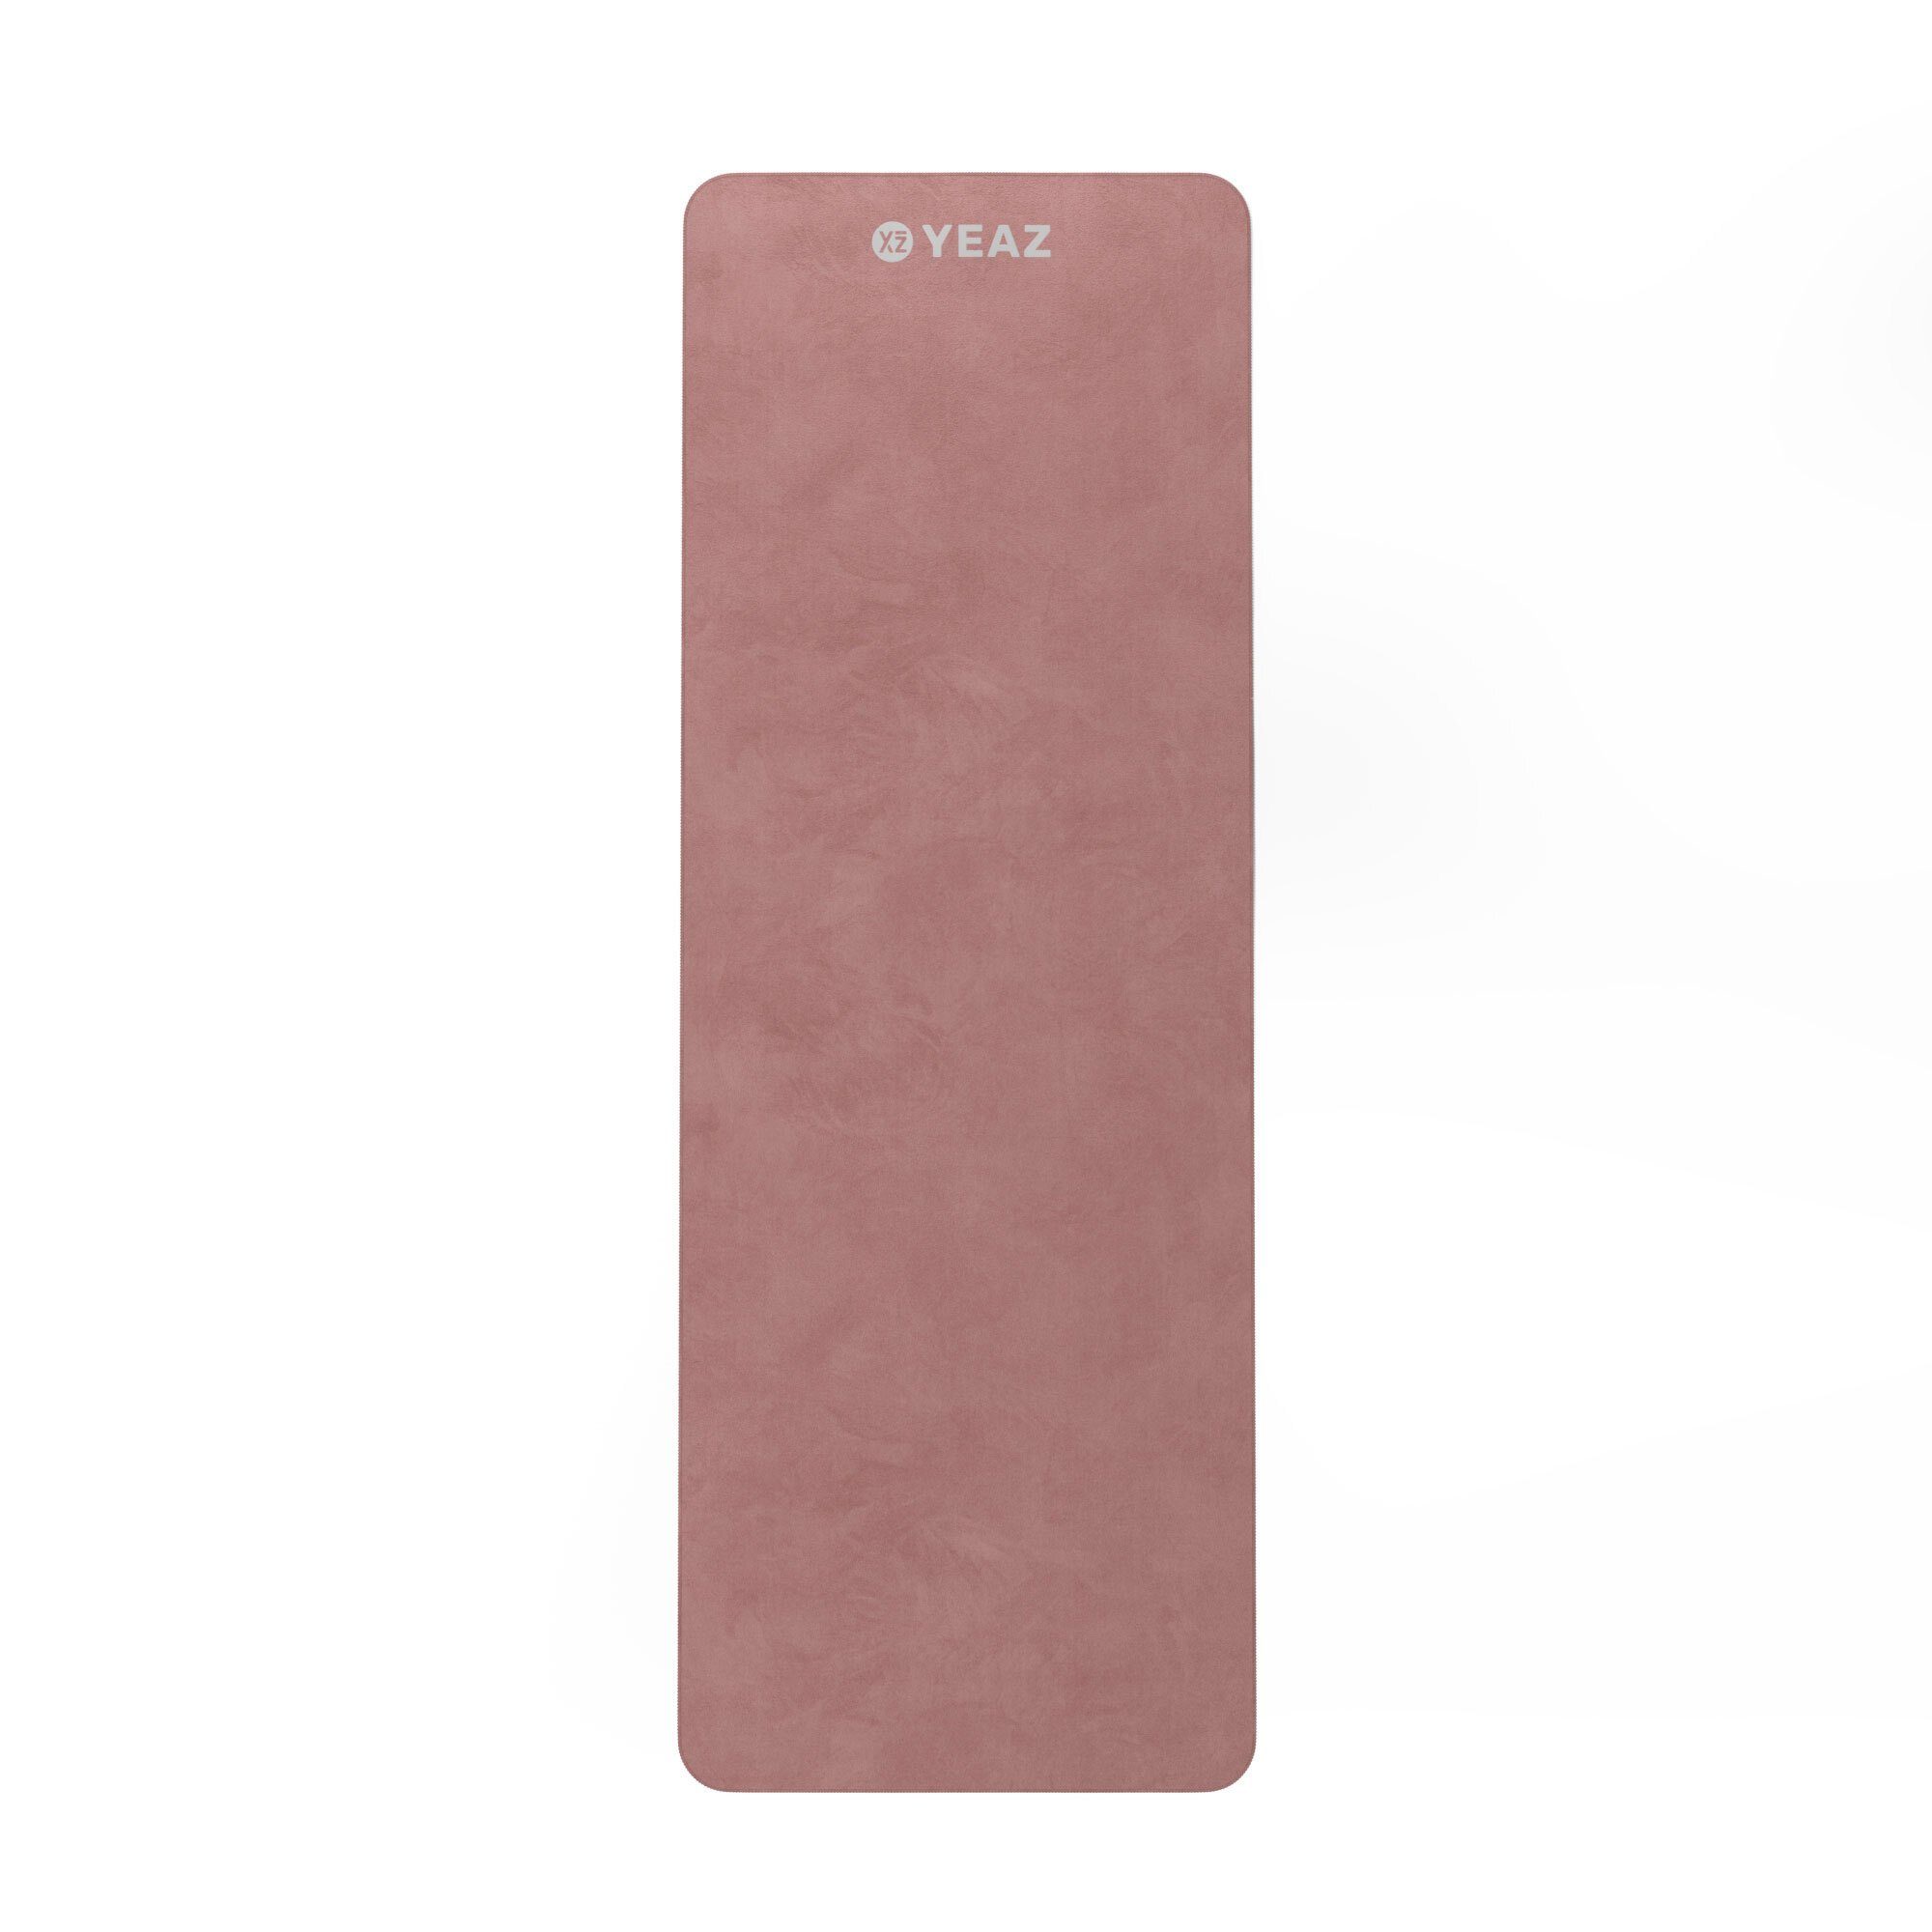 & Yogamatte - CARESS matte pink set handtuch YEAZ